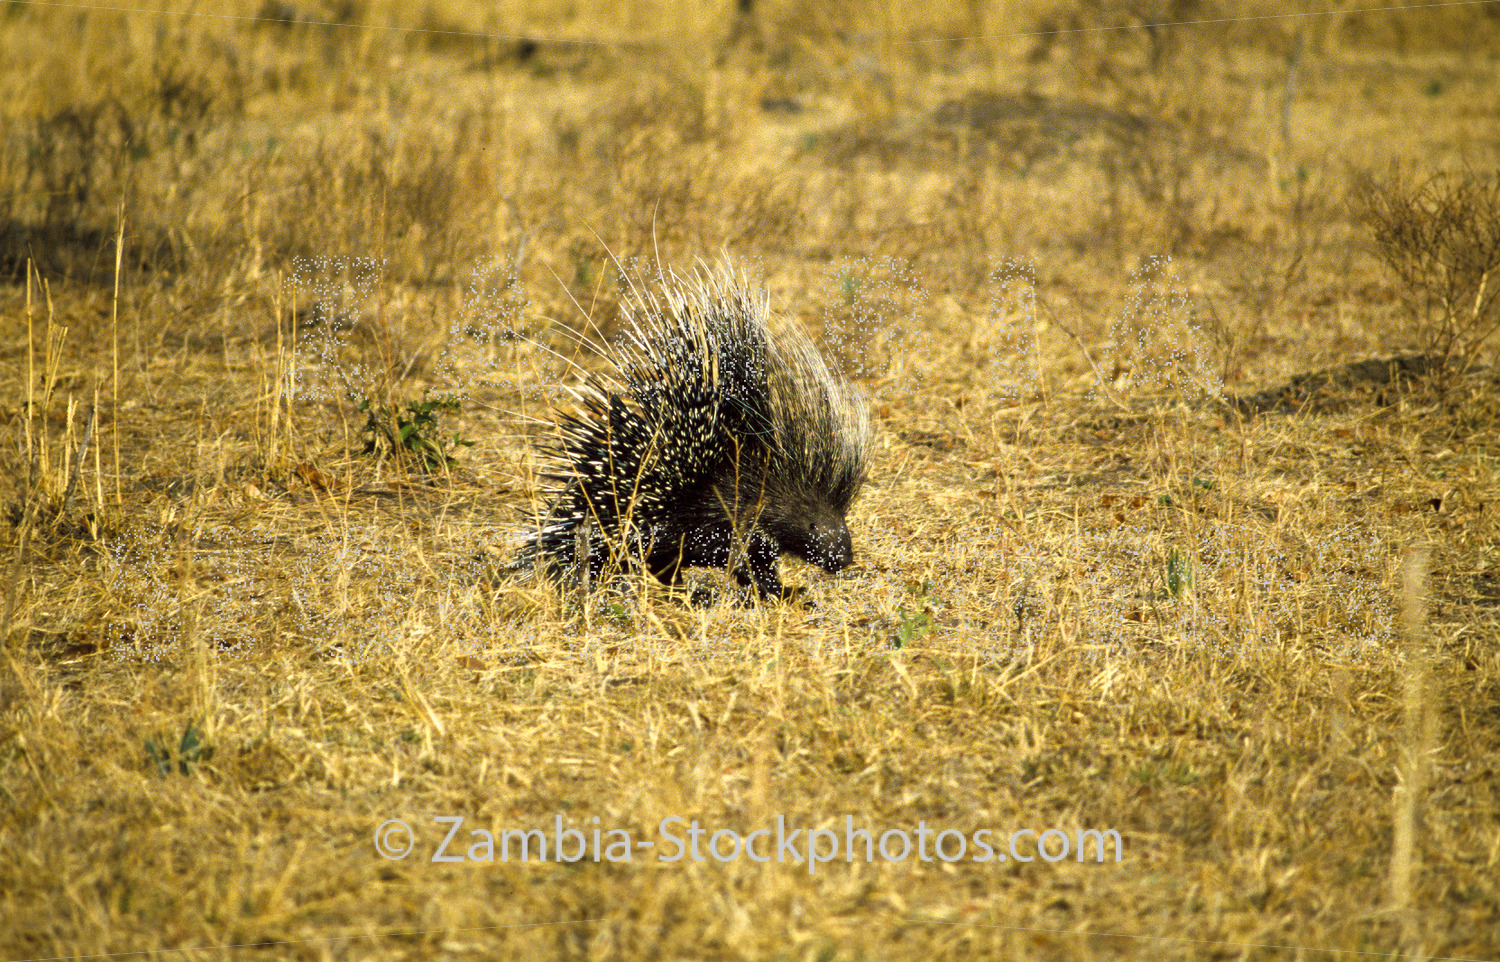 Porcupine.jpg - Zamstockphotos.com